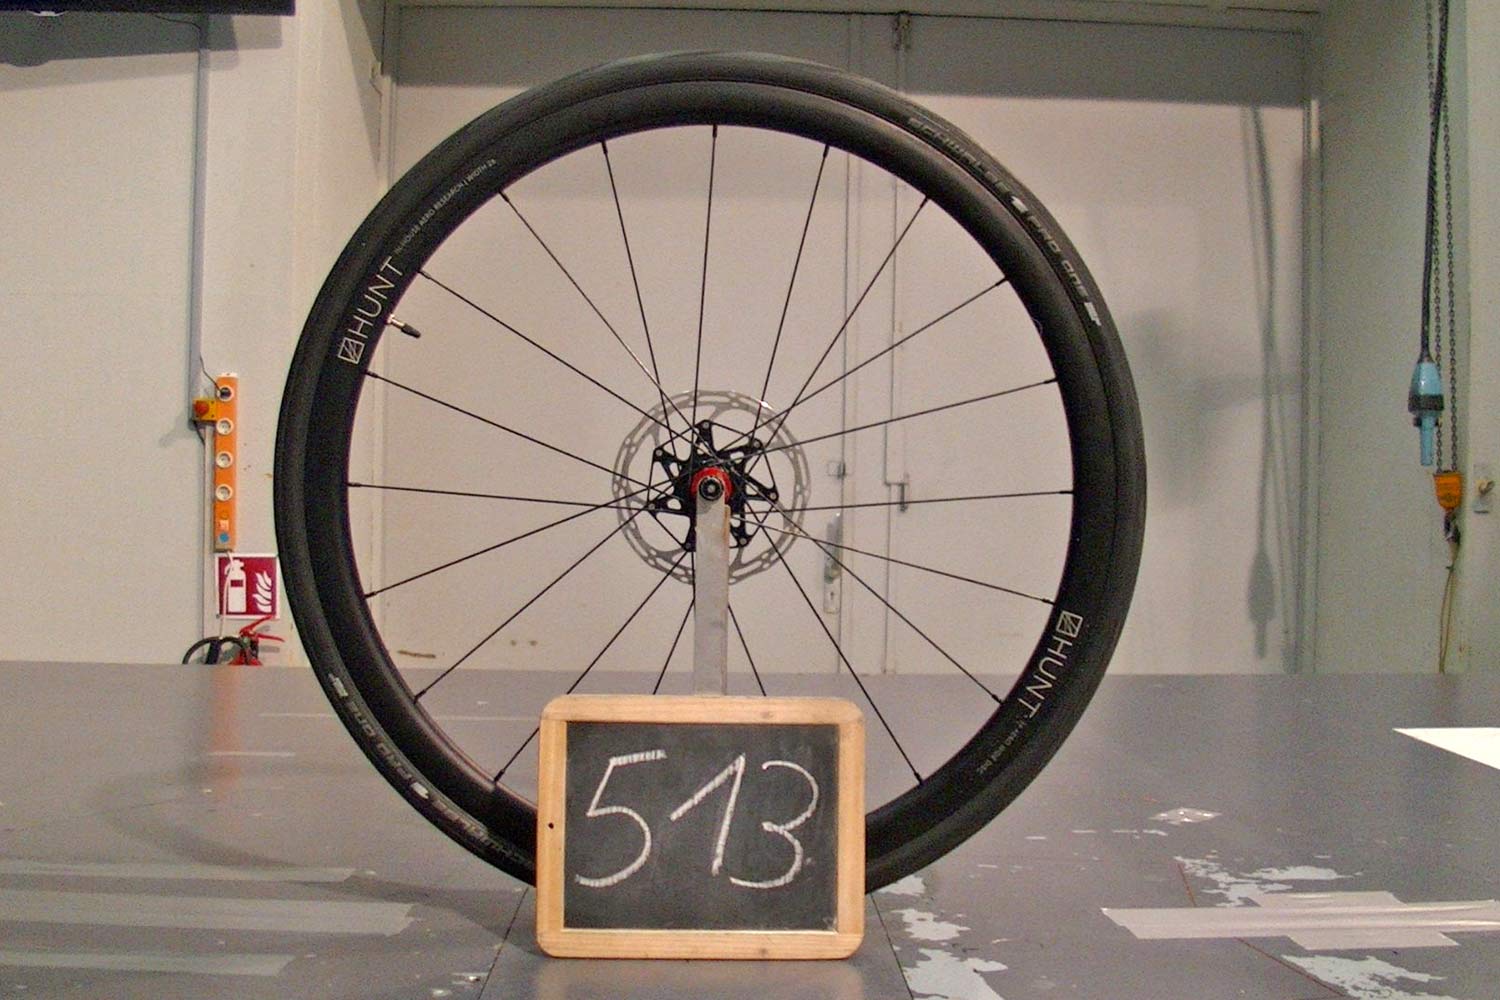 Hunt 34 Aero Wide Disc wheels, wind tunnel tested, aerodynamic aluminum alloy disc brake road bike wheelset